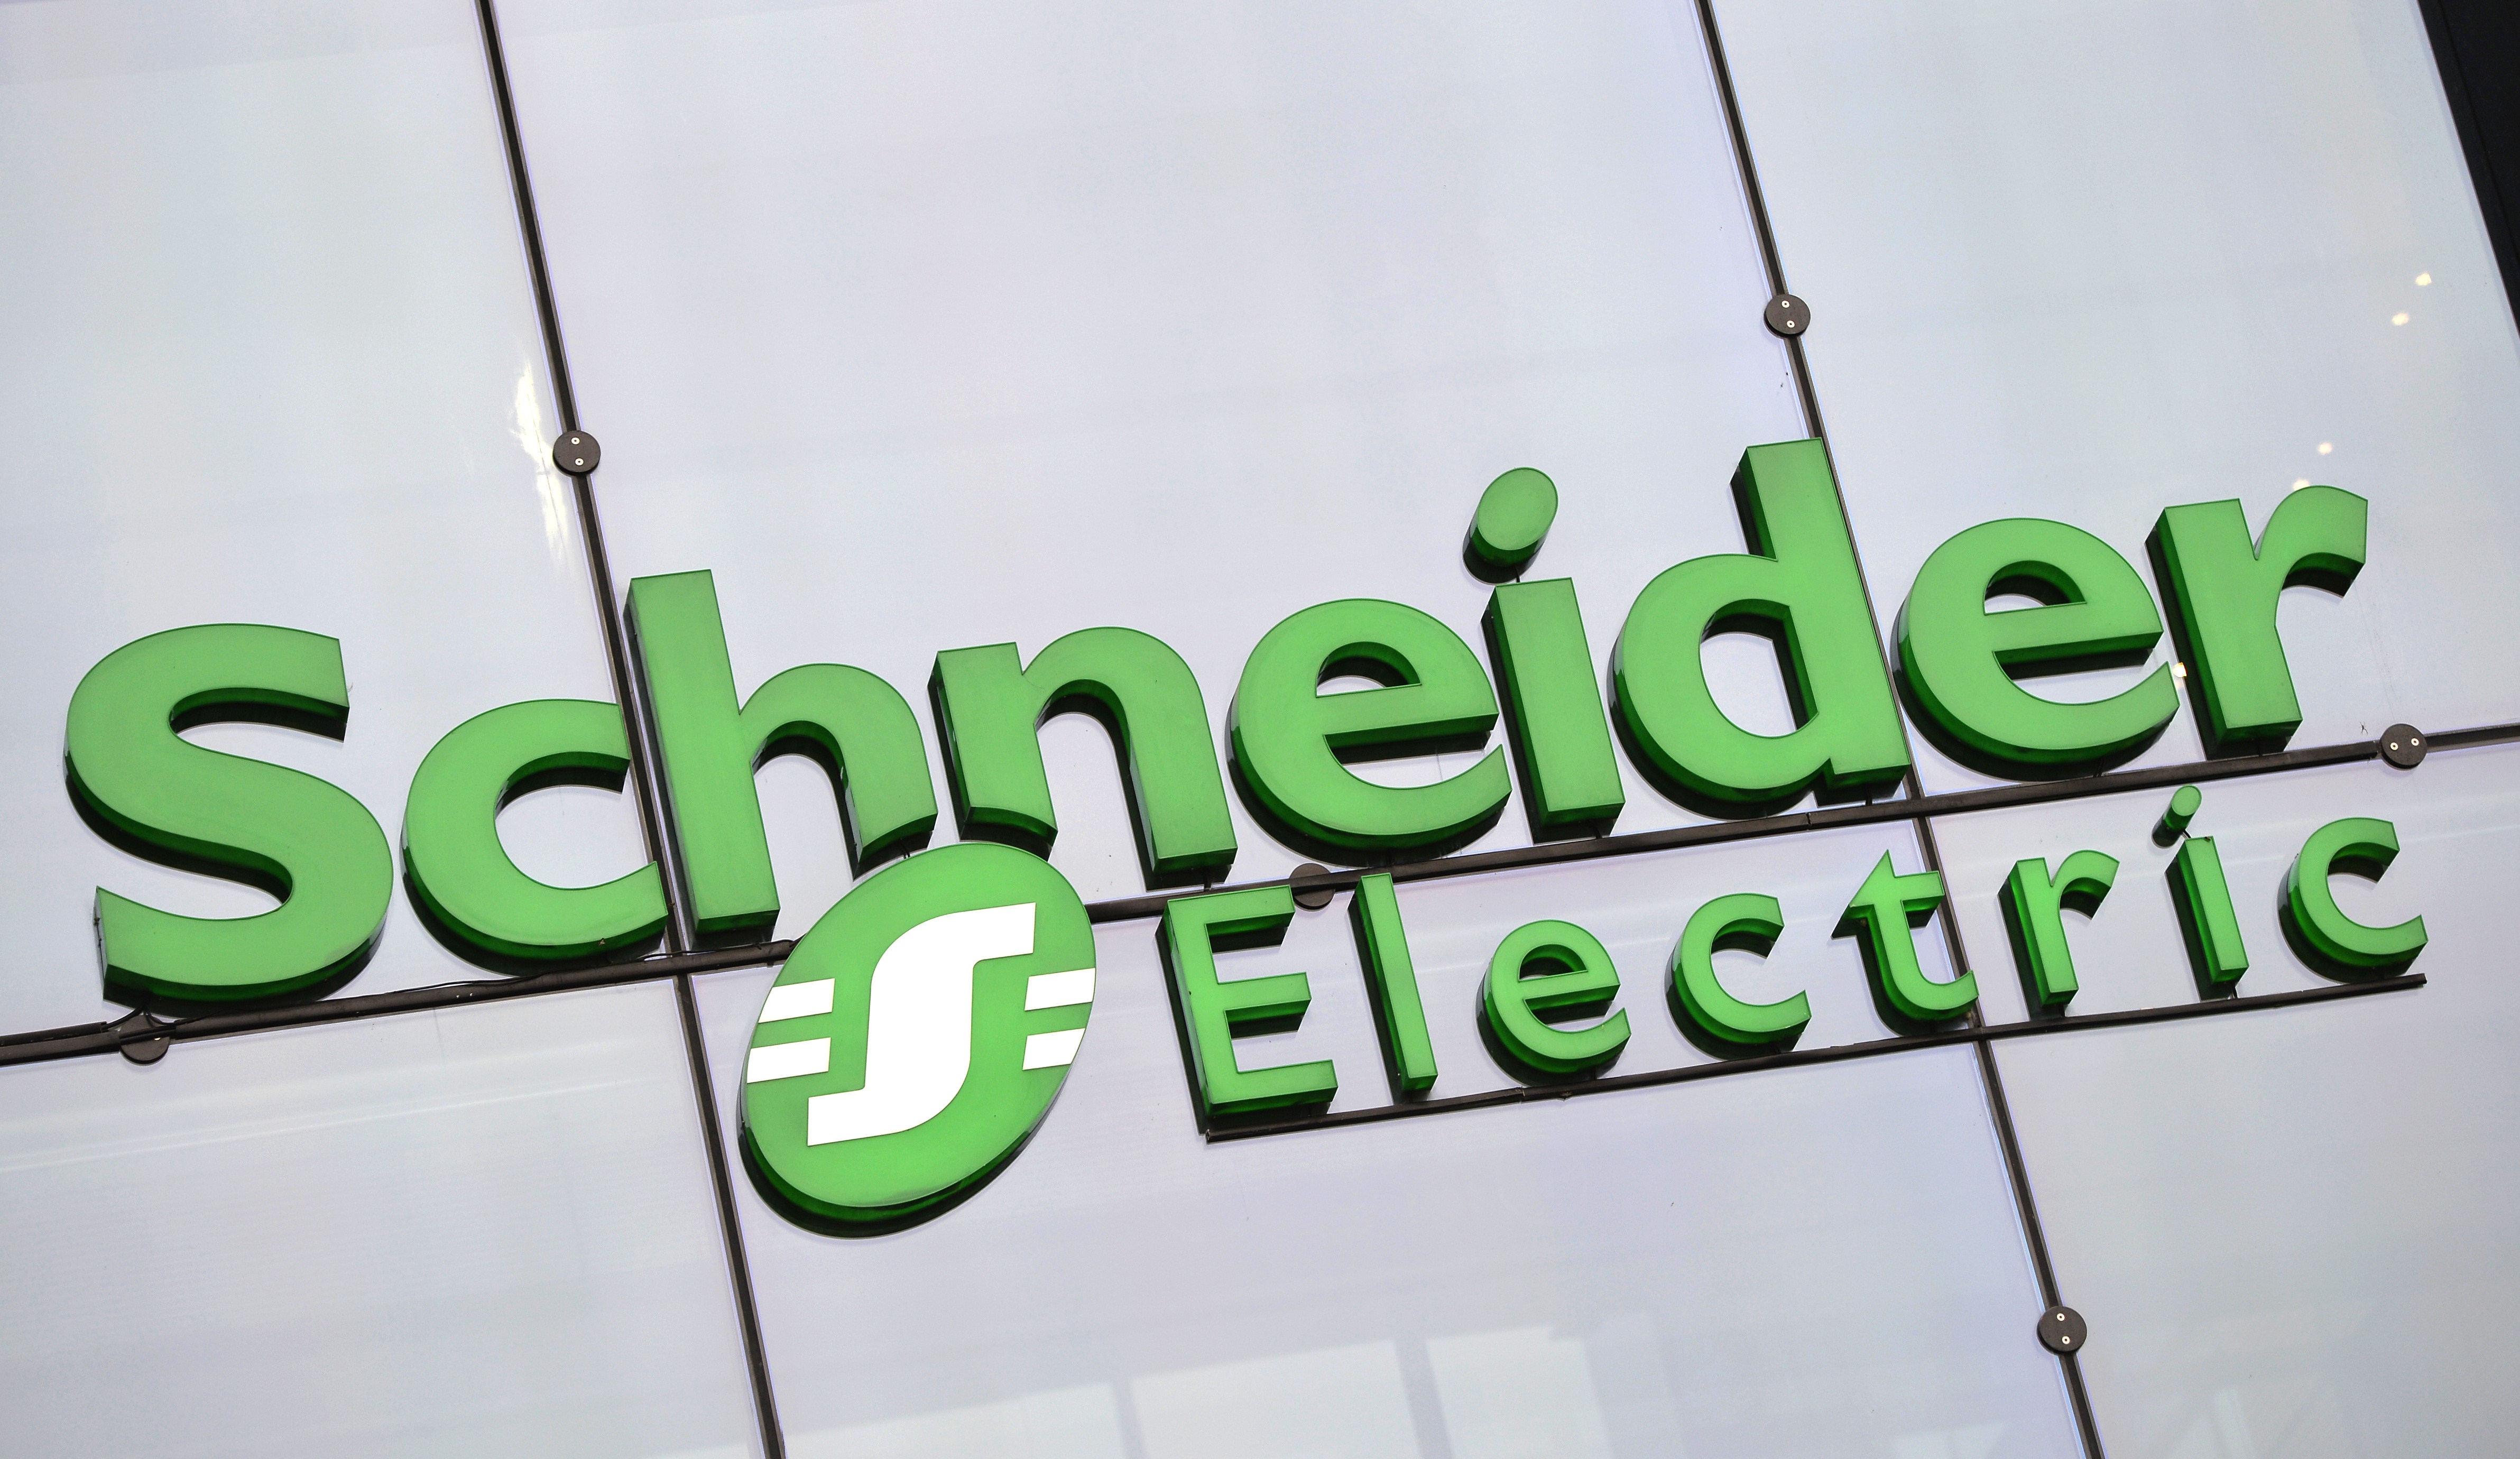 Green Schneider Electric logo outside an office building